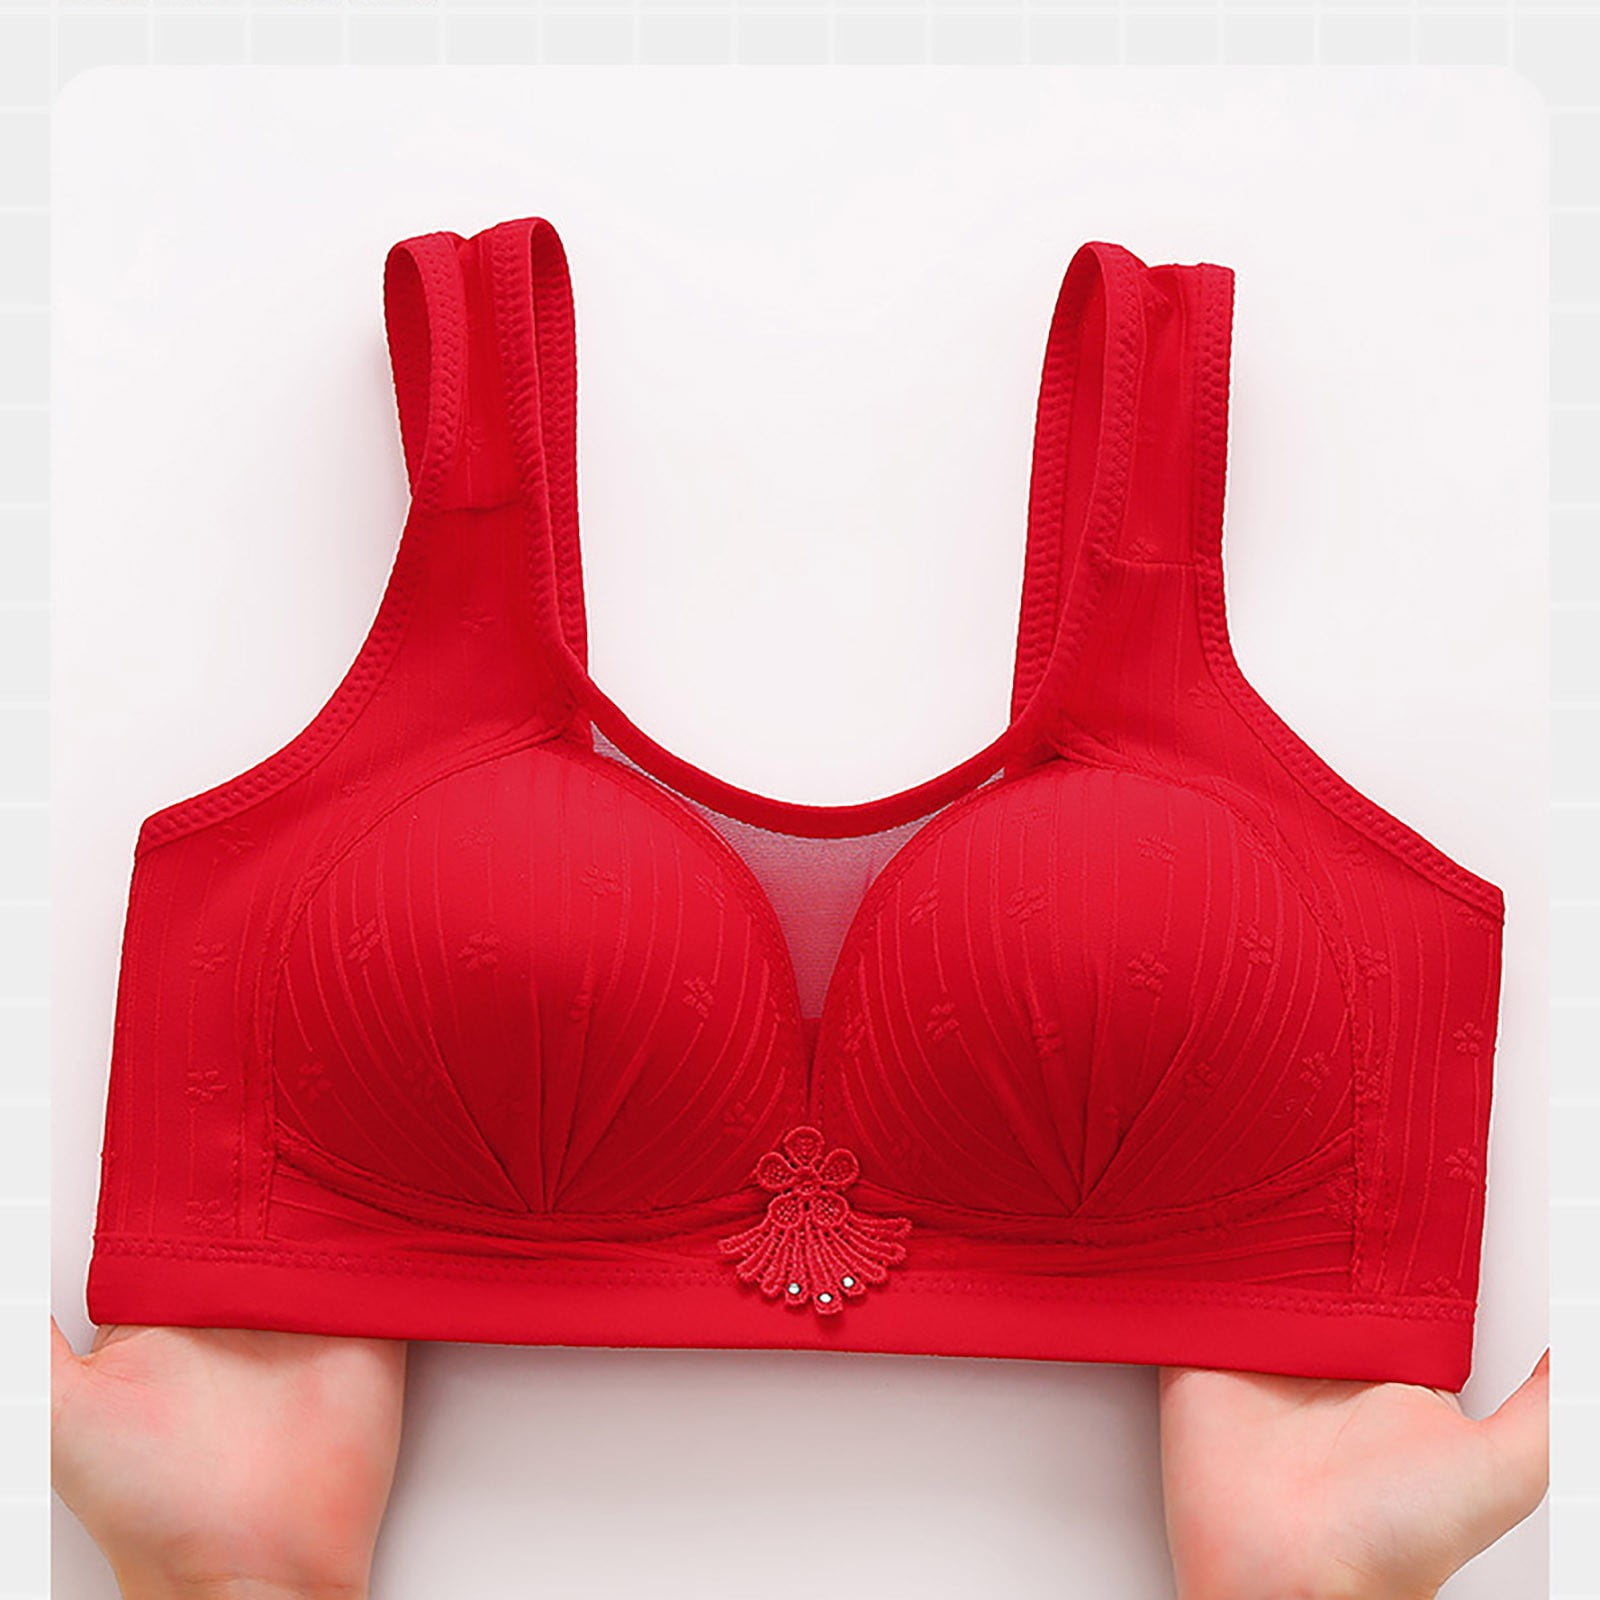 Buy 2pcs/lot M~XXL Bra Lace Push Up Bra Sutian Bras for Sujetador Women's  Clothing Lady Lingerie Red Bands Size XL at